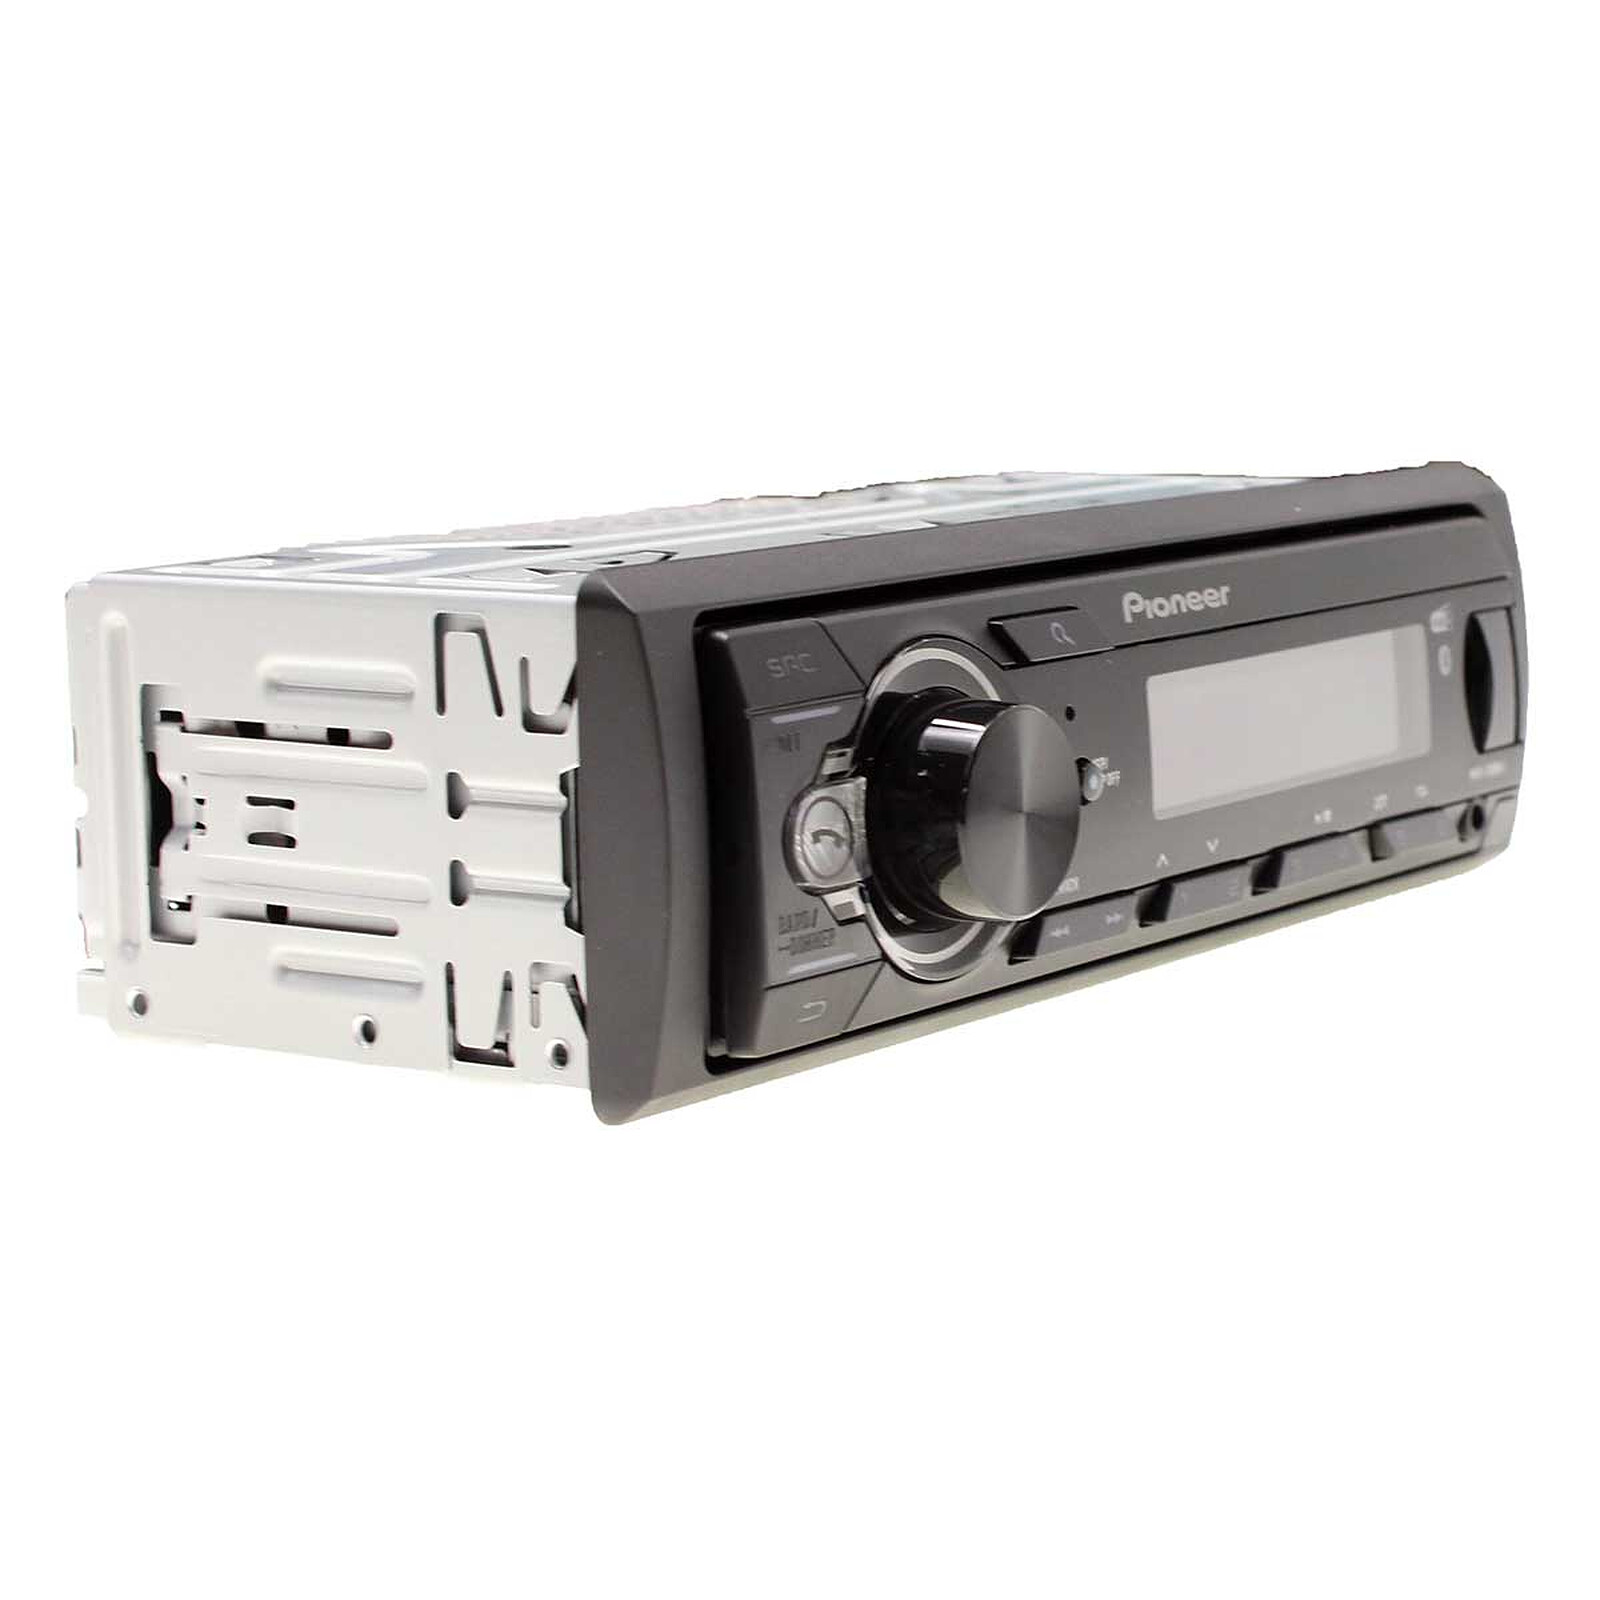 Pioneer MVH-330DAB - Car stereo - LDLC 3-year warranty